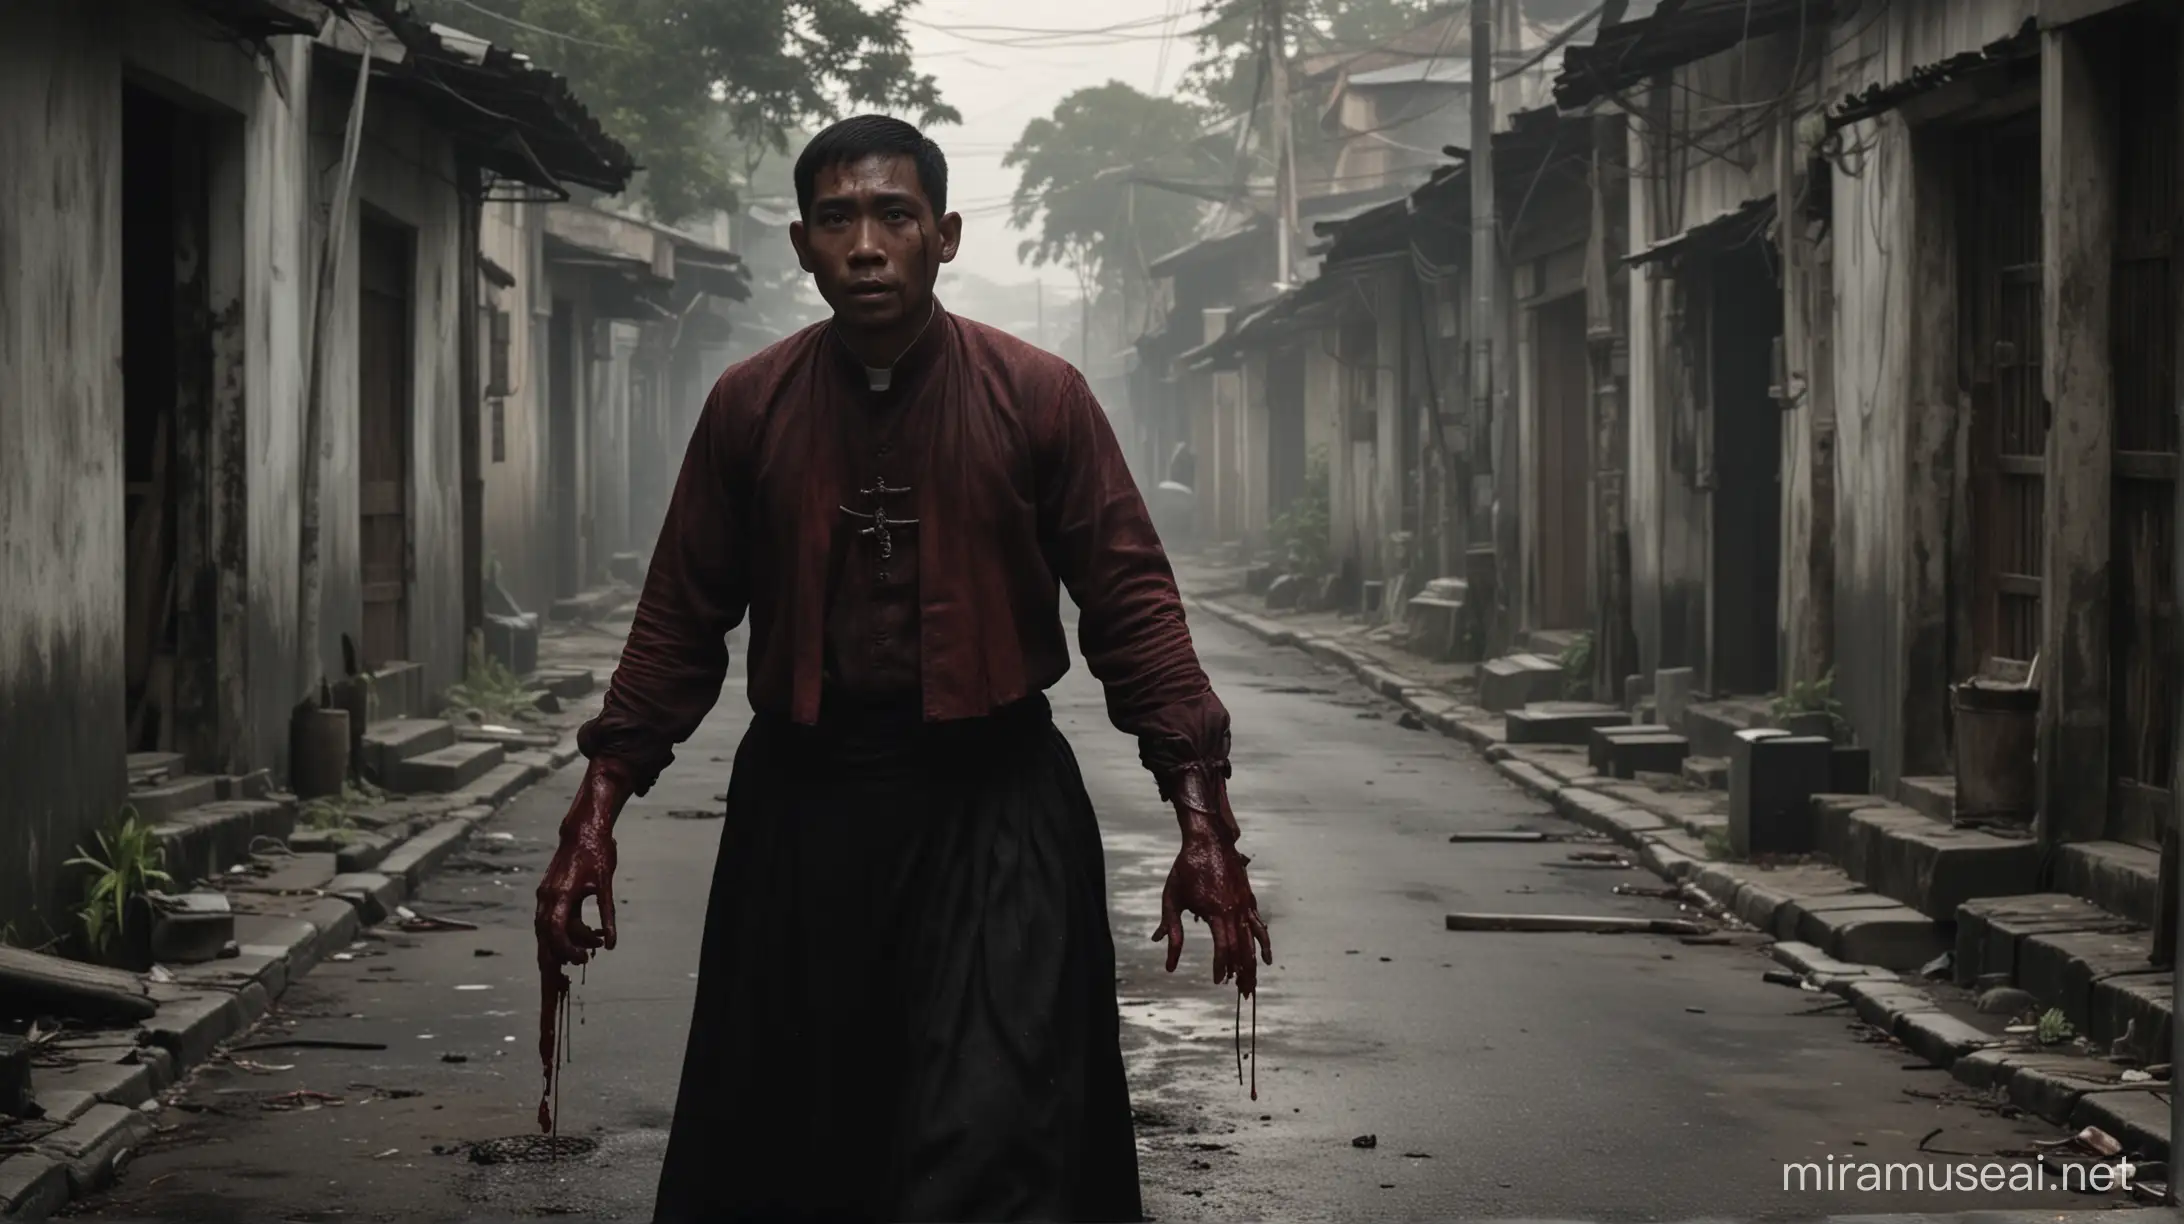 Filipino Catholic Murderer Priest Roaming Dark Colonial Streets